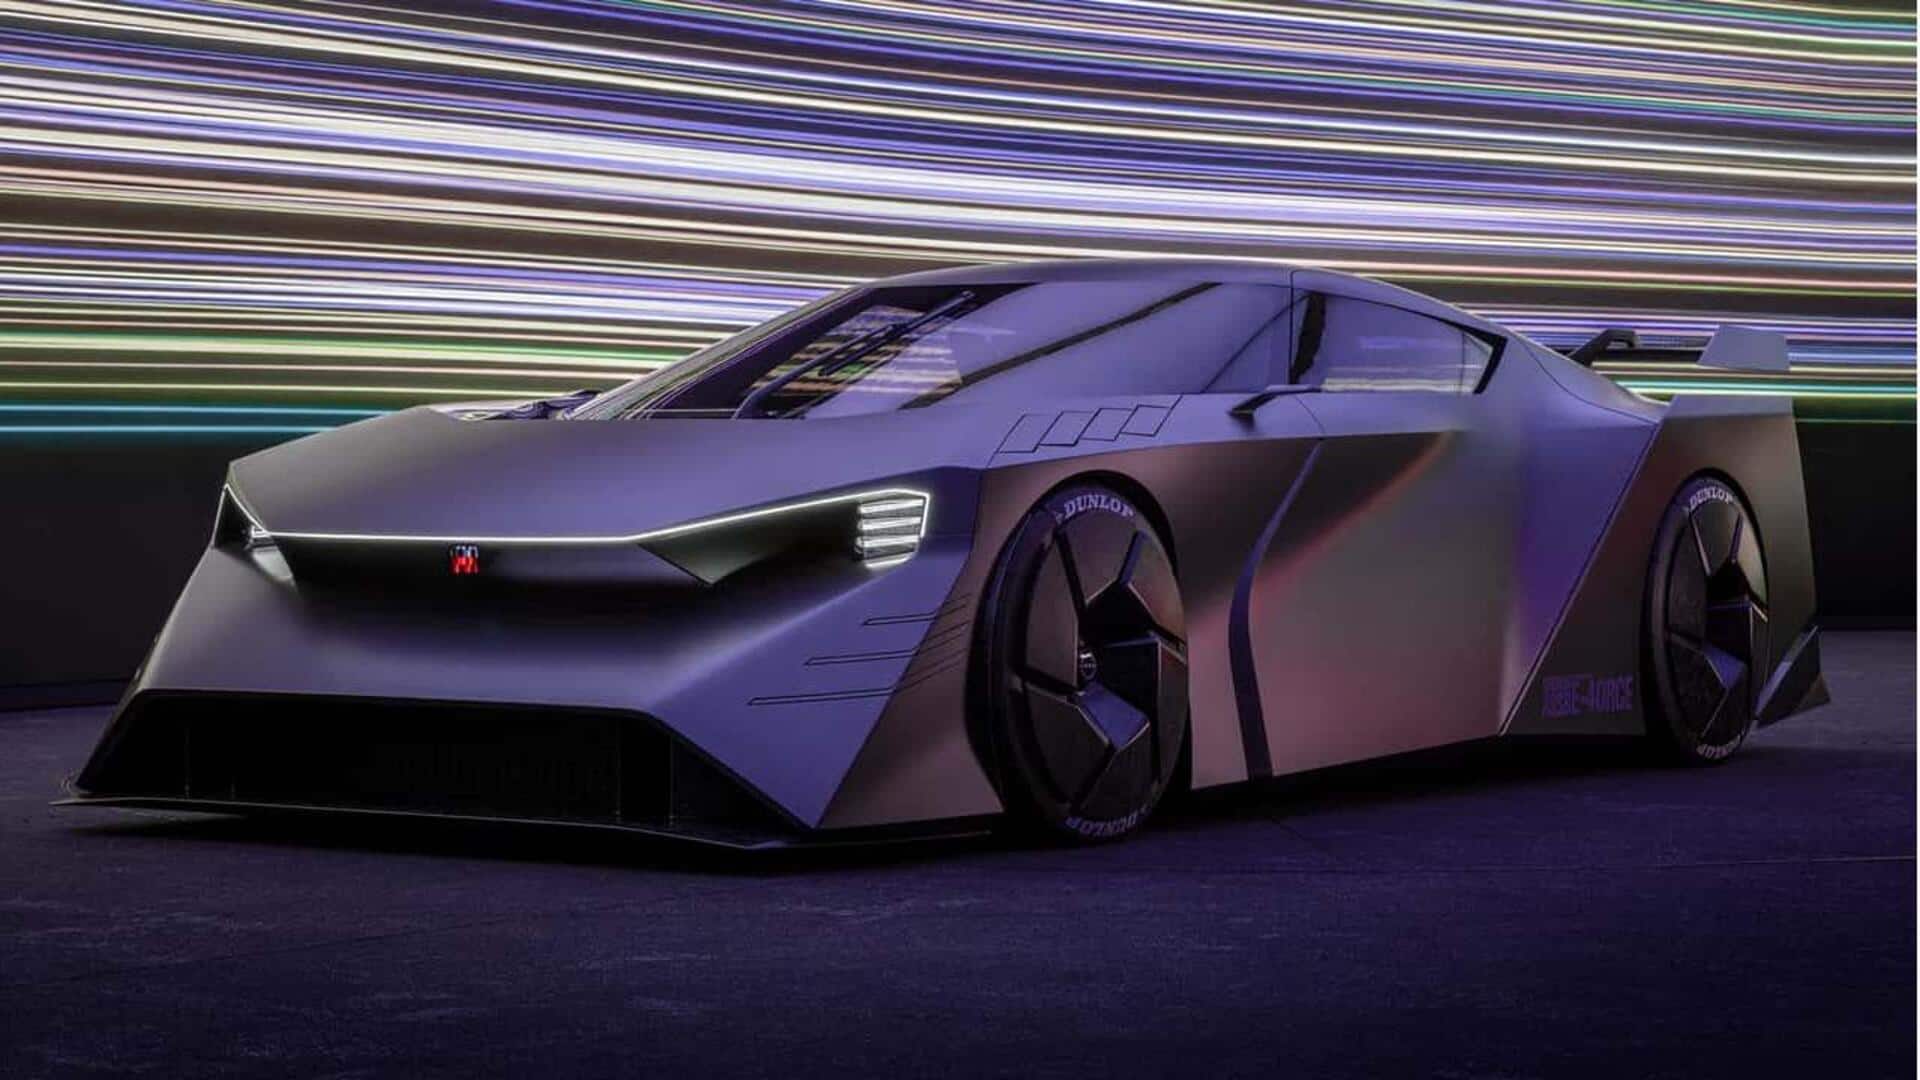 Nissan's Hyper Force EV looks like a zero-emission Batmobile